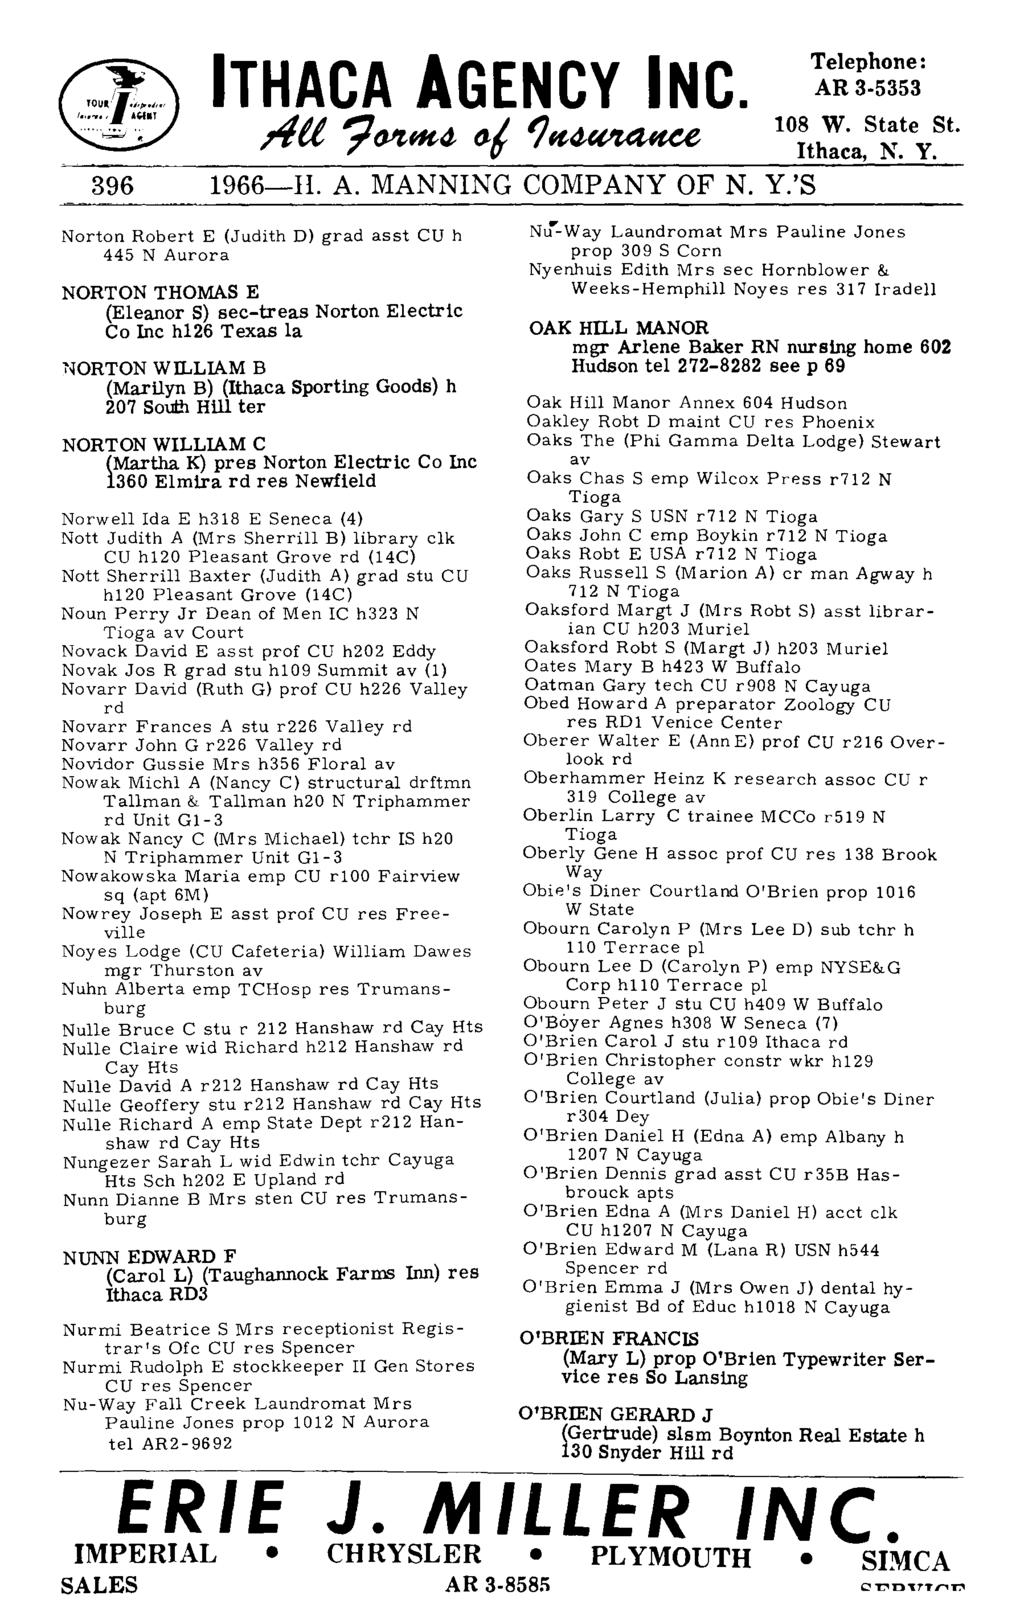 396 1966-H. A. MANNING COMPANY OF N. Y.'S Norton Robert E (Judith D) grad asst CU h 445 N Aurora NORTON THOMAS E (Eleanor S) sec-treas Norton Electric Co Inc h126 Texas la NORTON Wn.